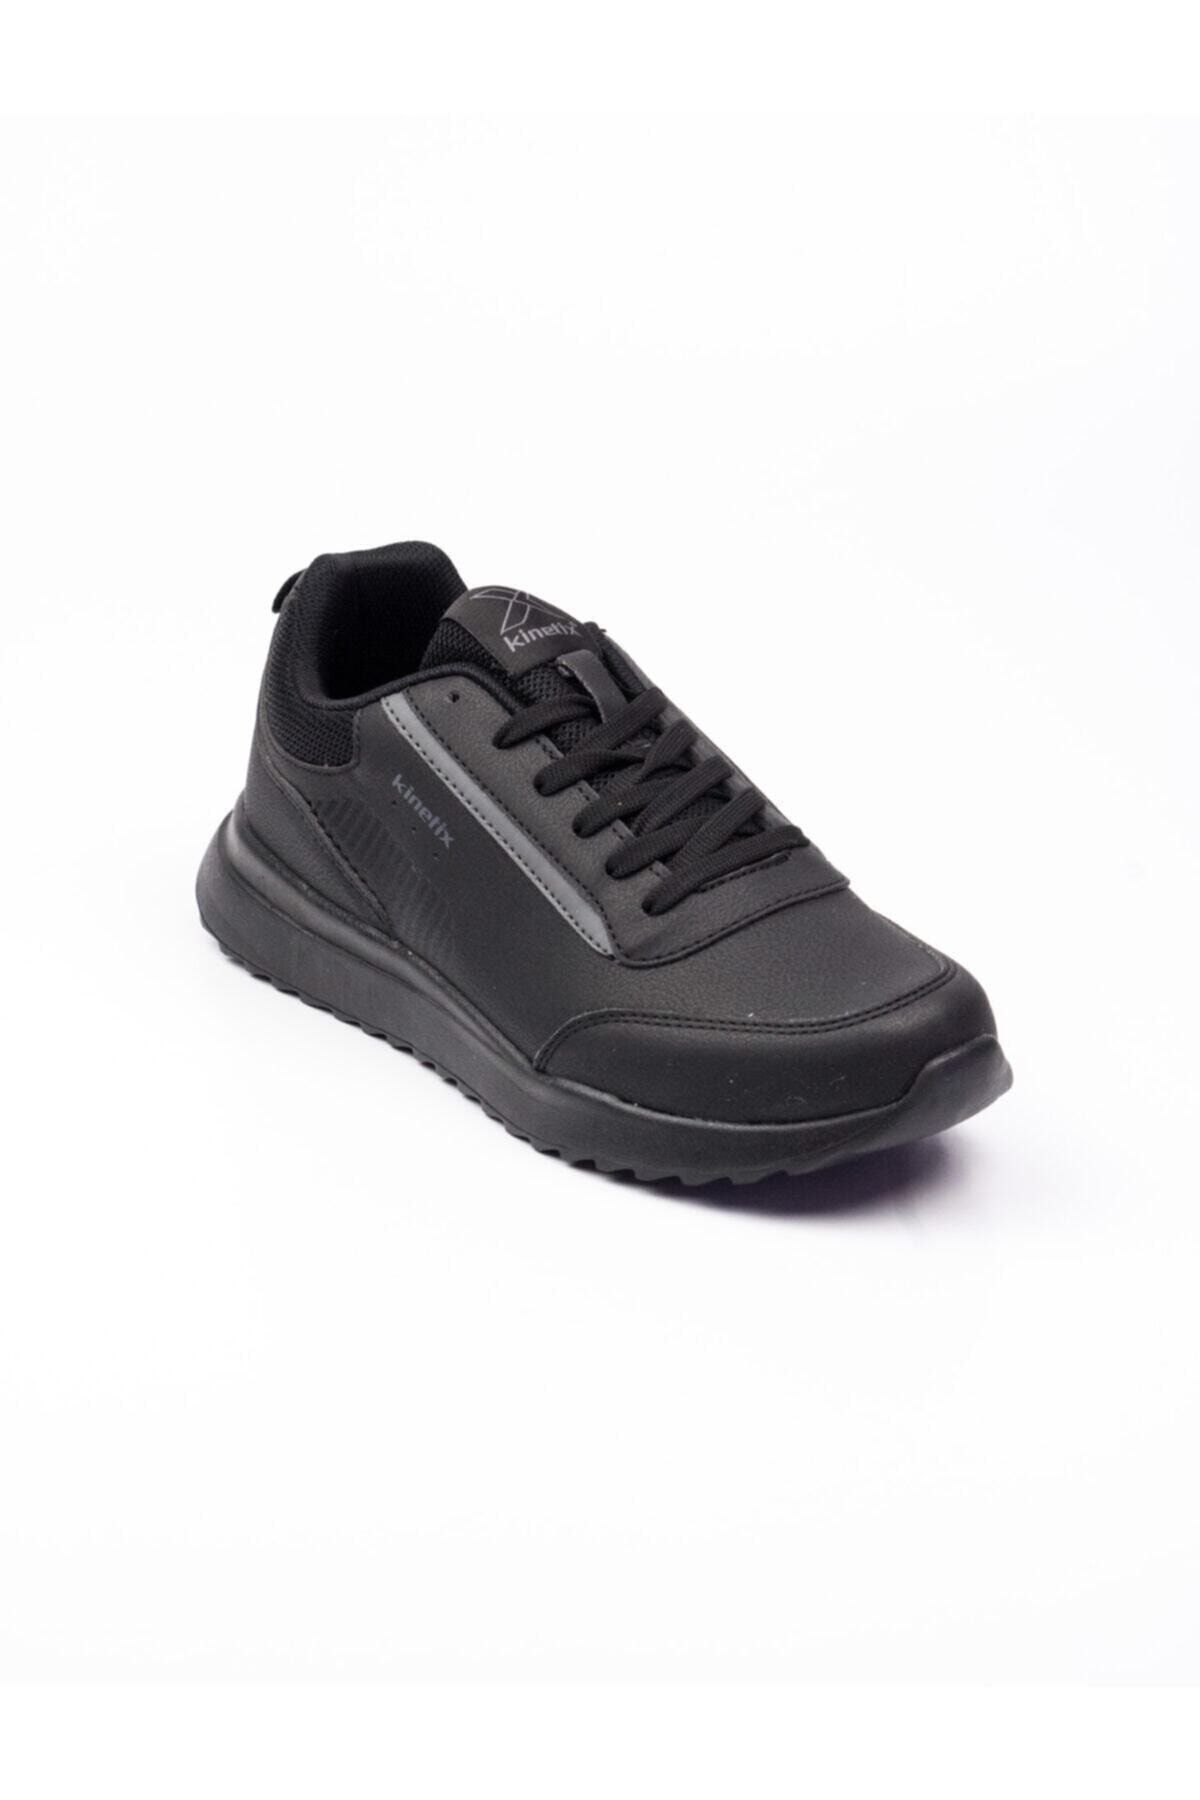 Kinetix BRONX M Siyah erkek Sneaker Ayakkabı 100556287